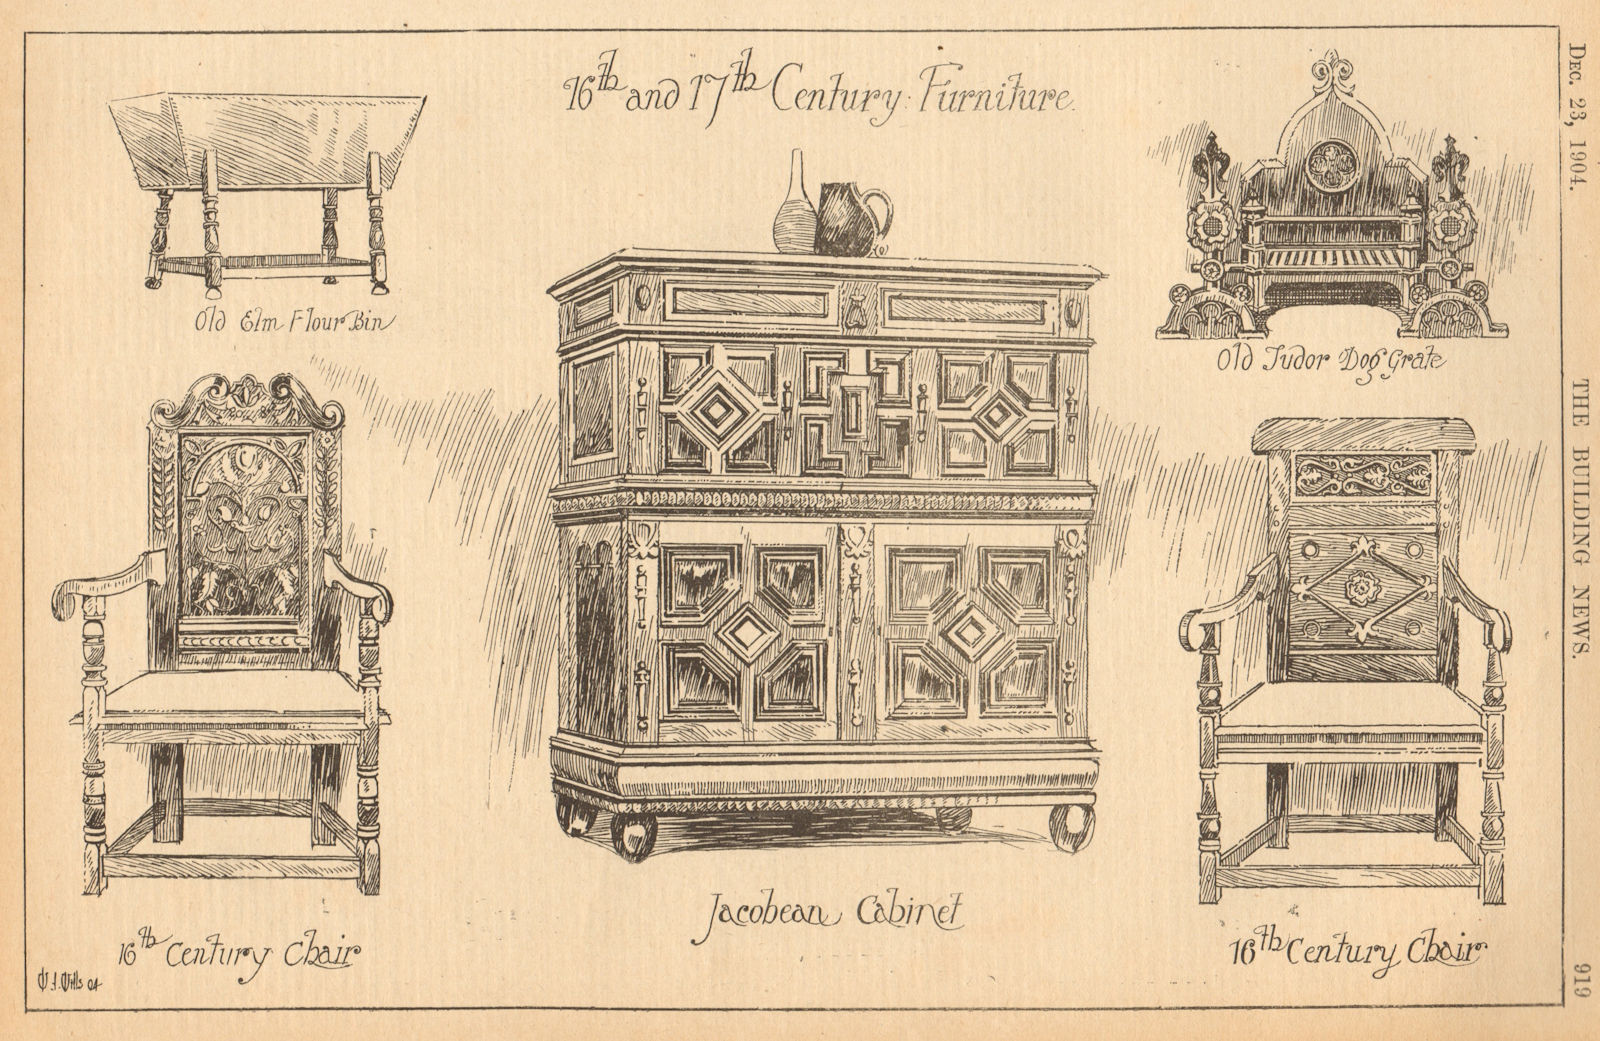 16-17th century furniture. Chair Jacobean cabinet Tudor dog grate flour bin 1904